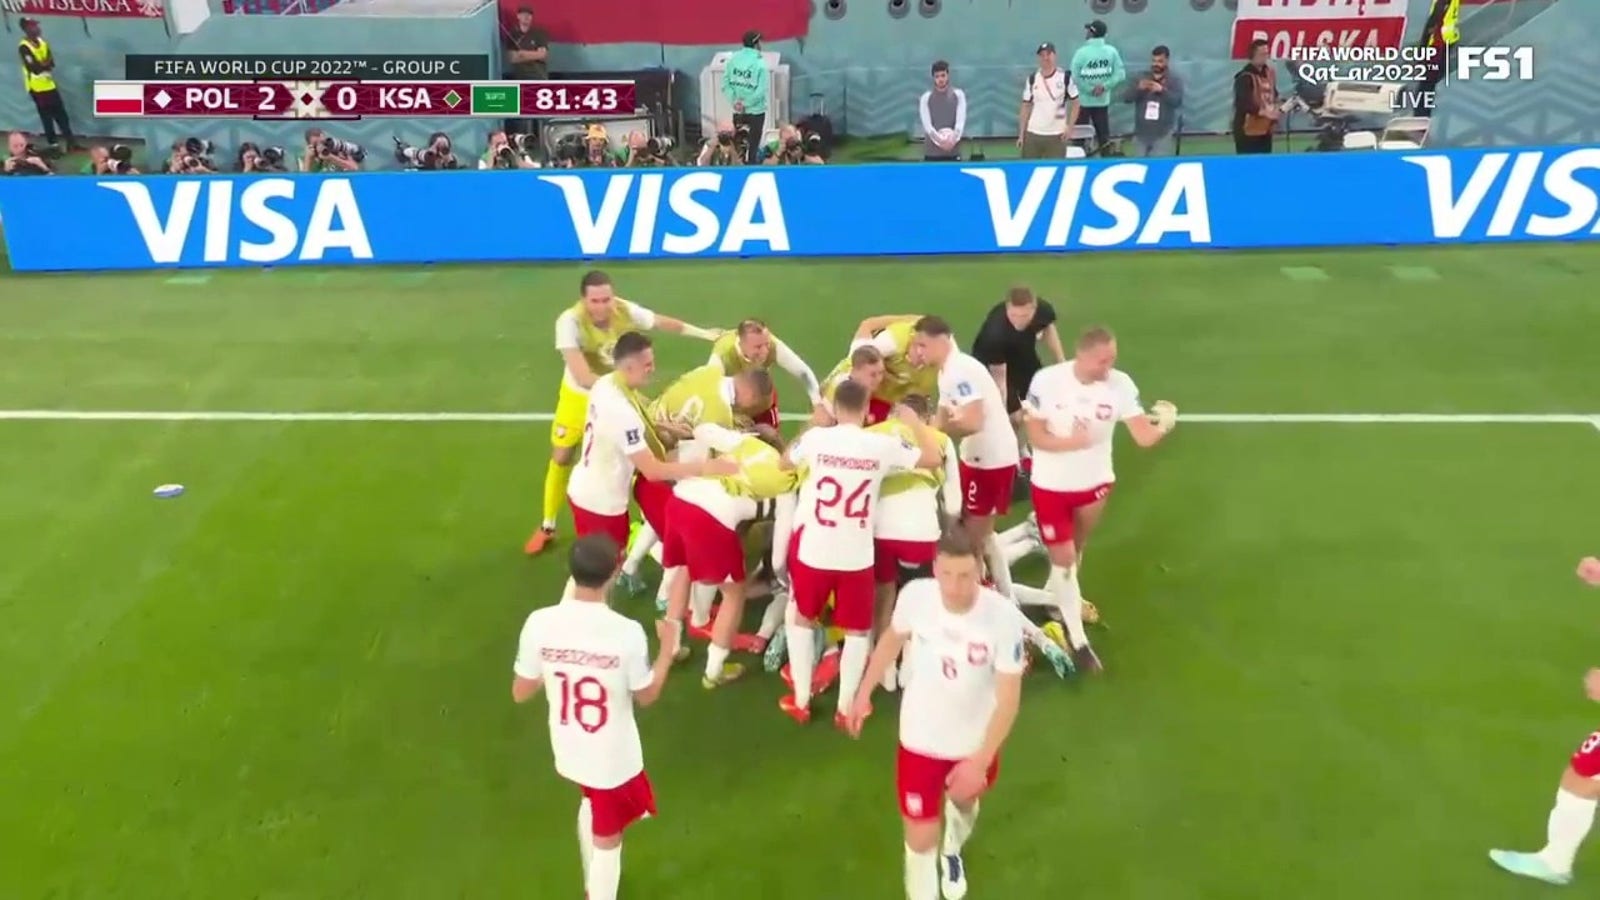 Robert Lewandowski scored his first goal for Poland at the World Cup against Saudi Arabia  2022 FIFA World Cup